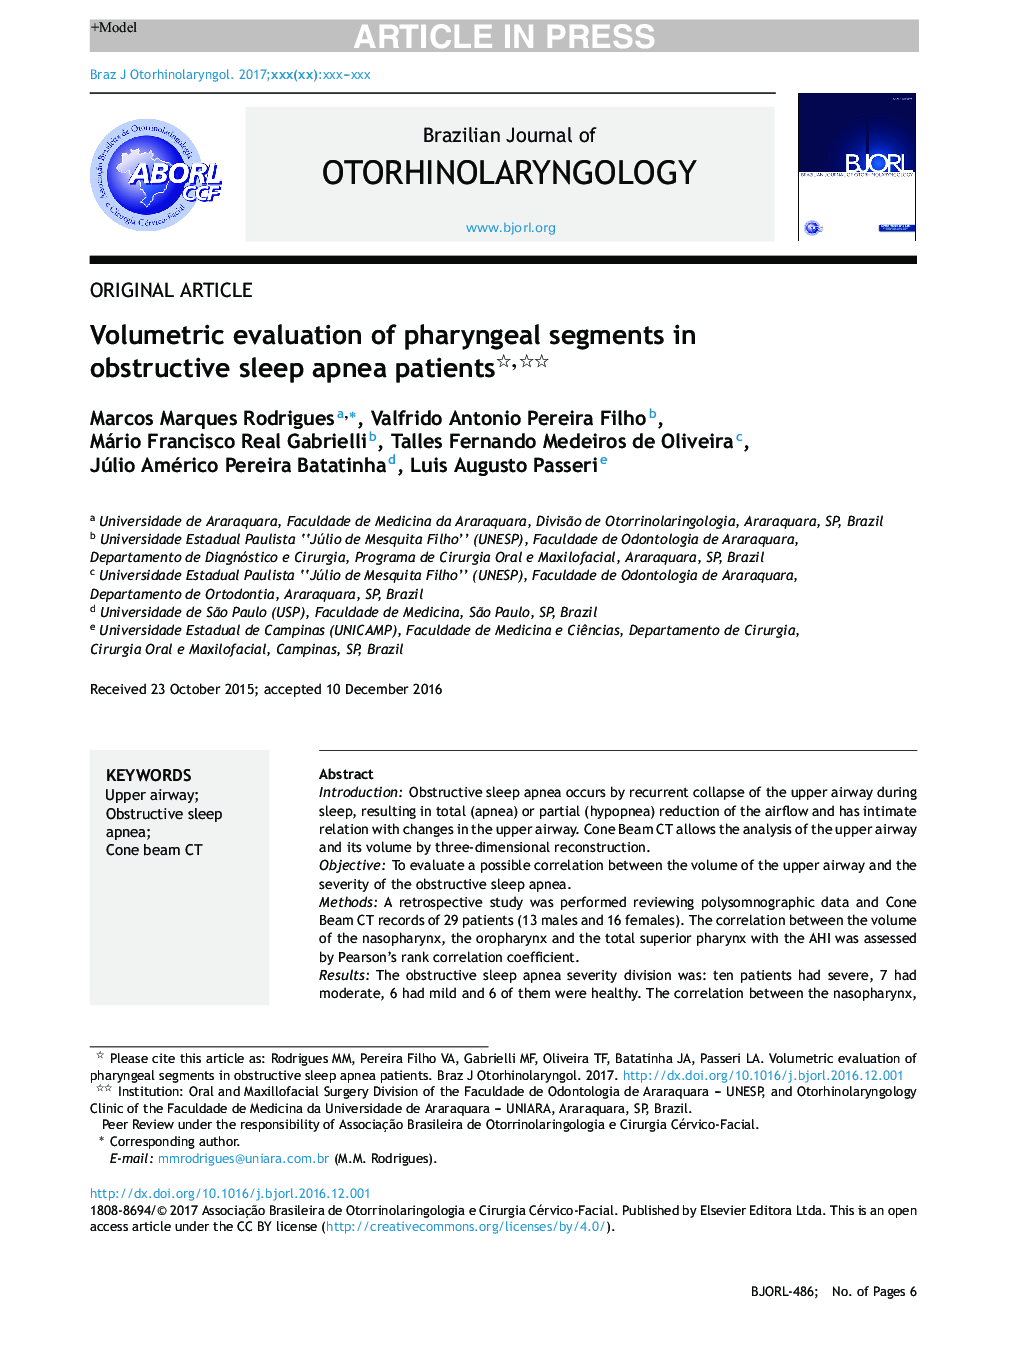 Volumetric evaluation of pharyngeal segments in obstructive sleep apnea patients